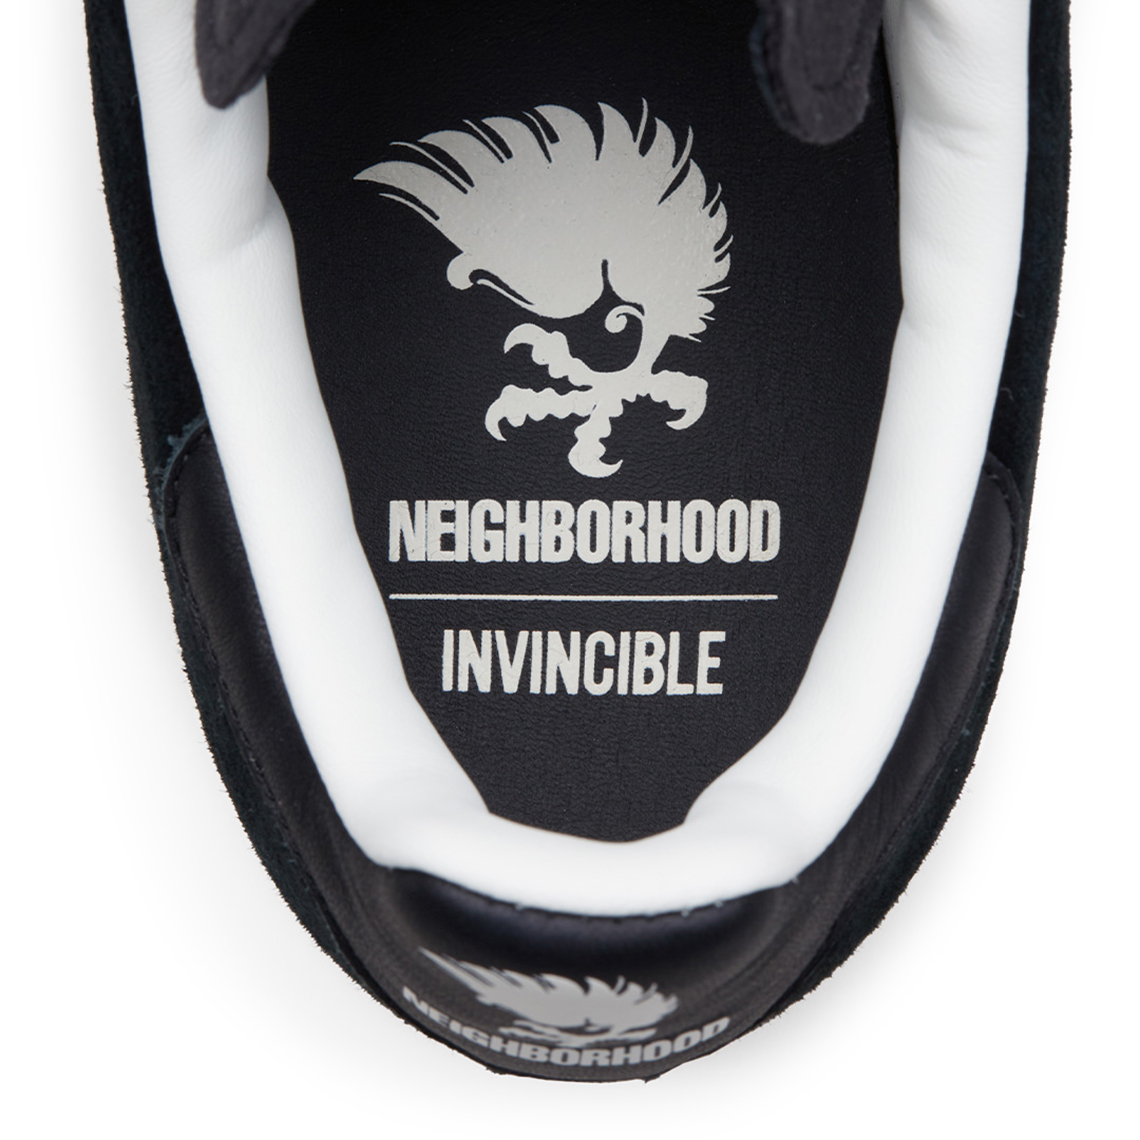 Invincible Neighborhood Adidas Consortium Campus Release Date 6